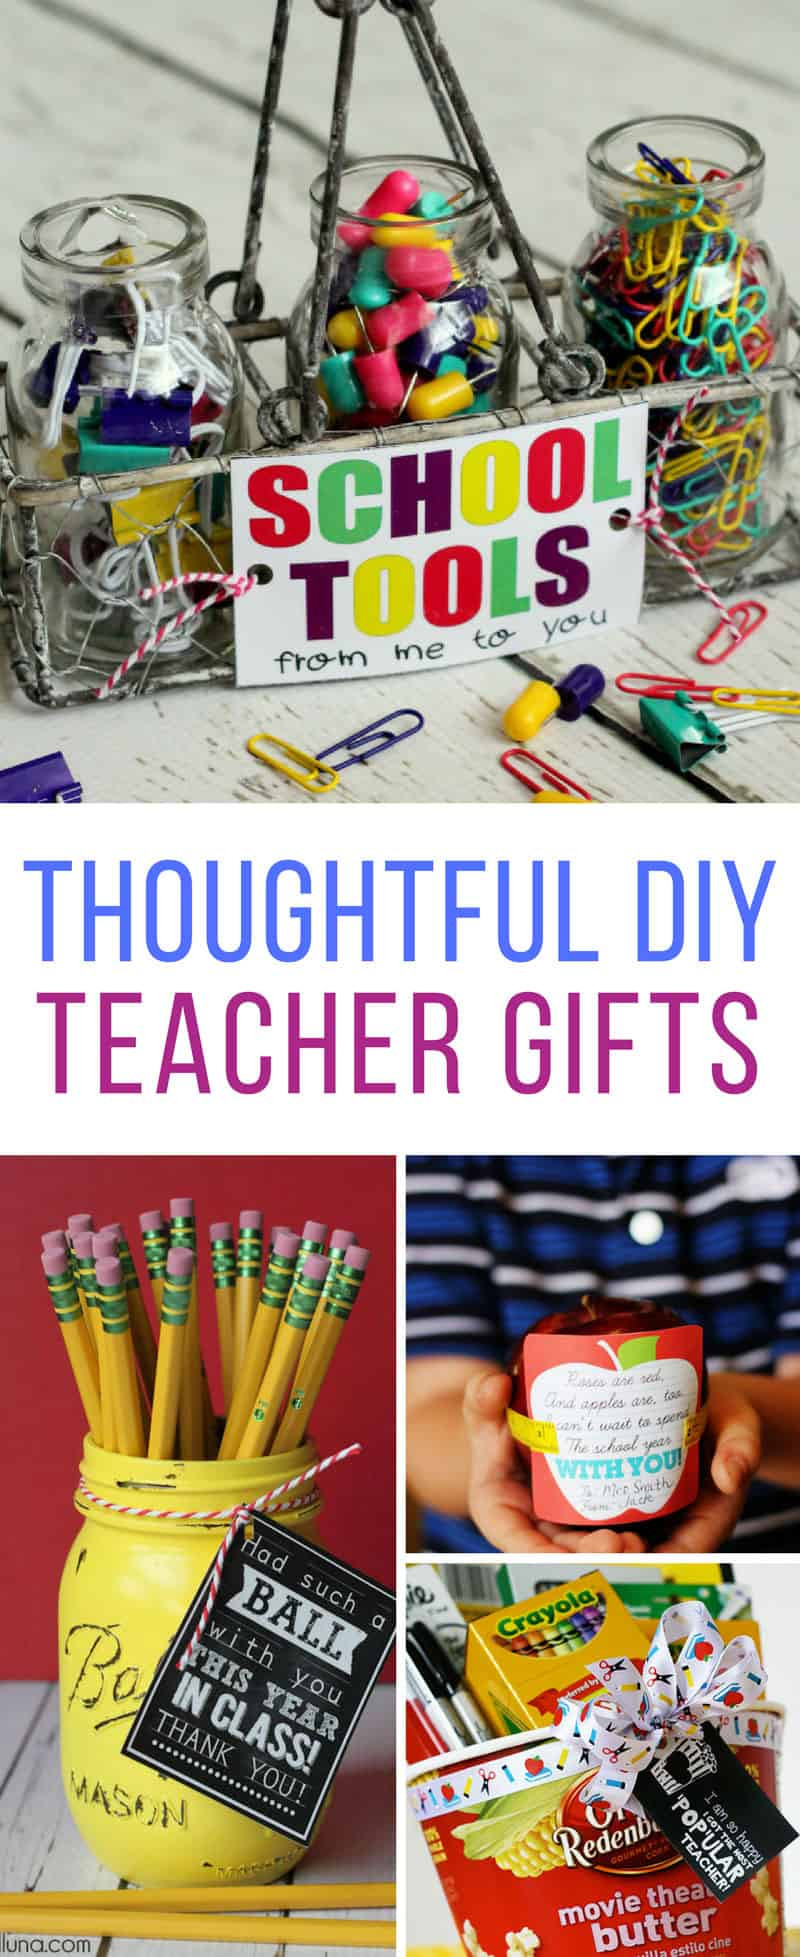 DIY Teacher Gifts Ideas
 DIY Back to School Teacher Gifts That Are Super CUTE